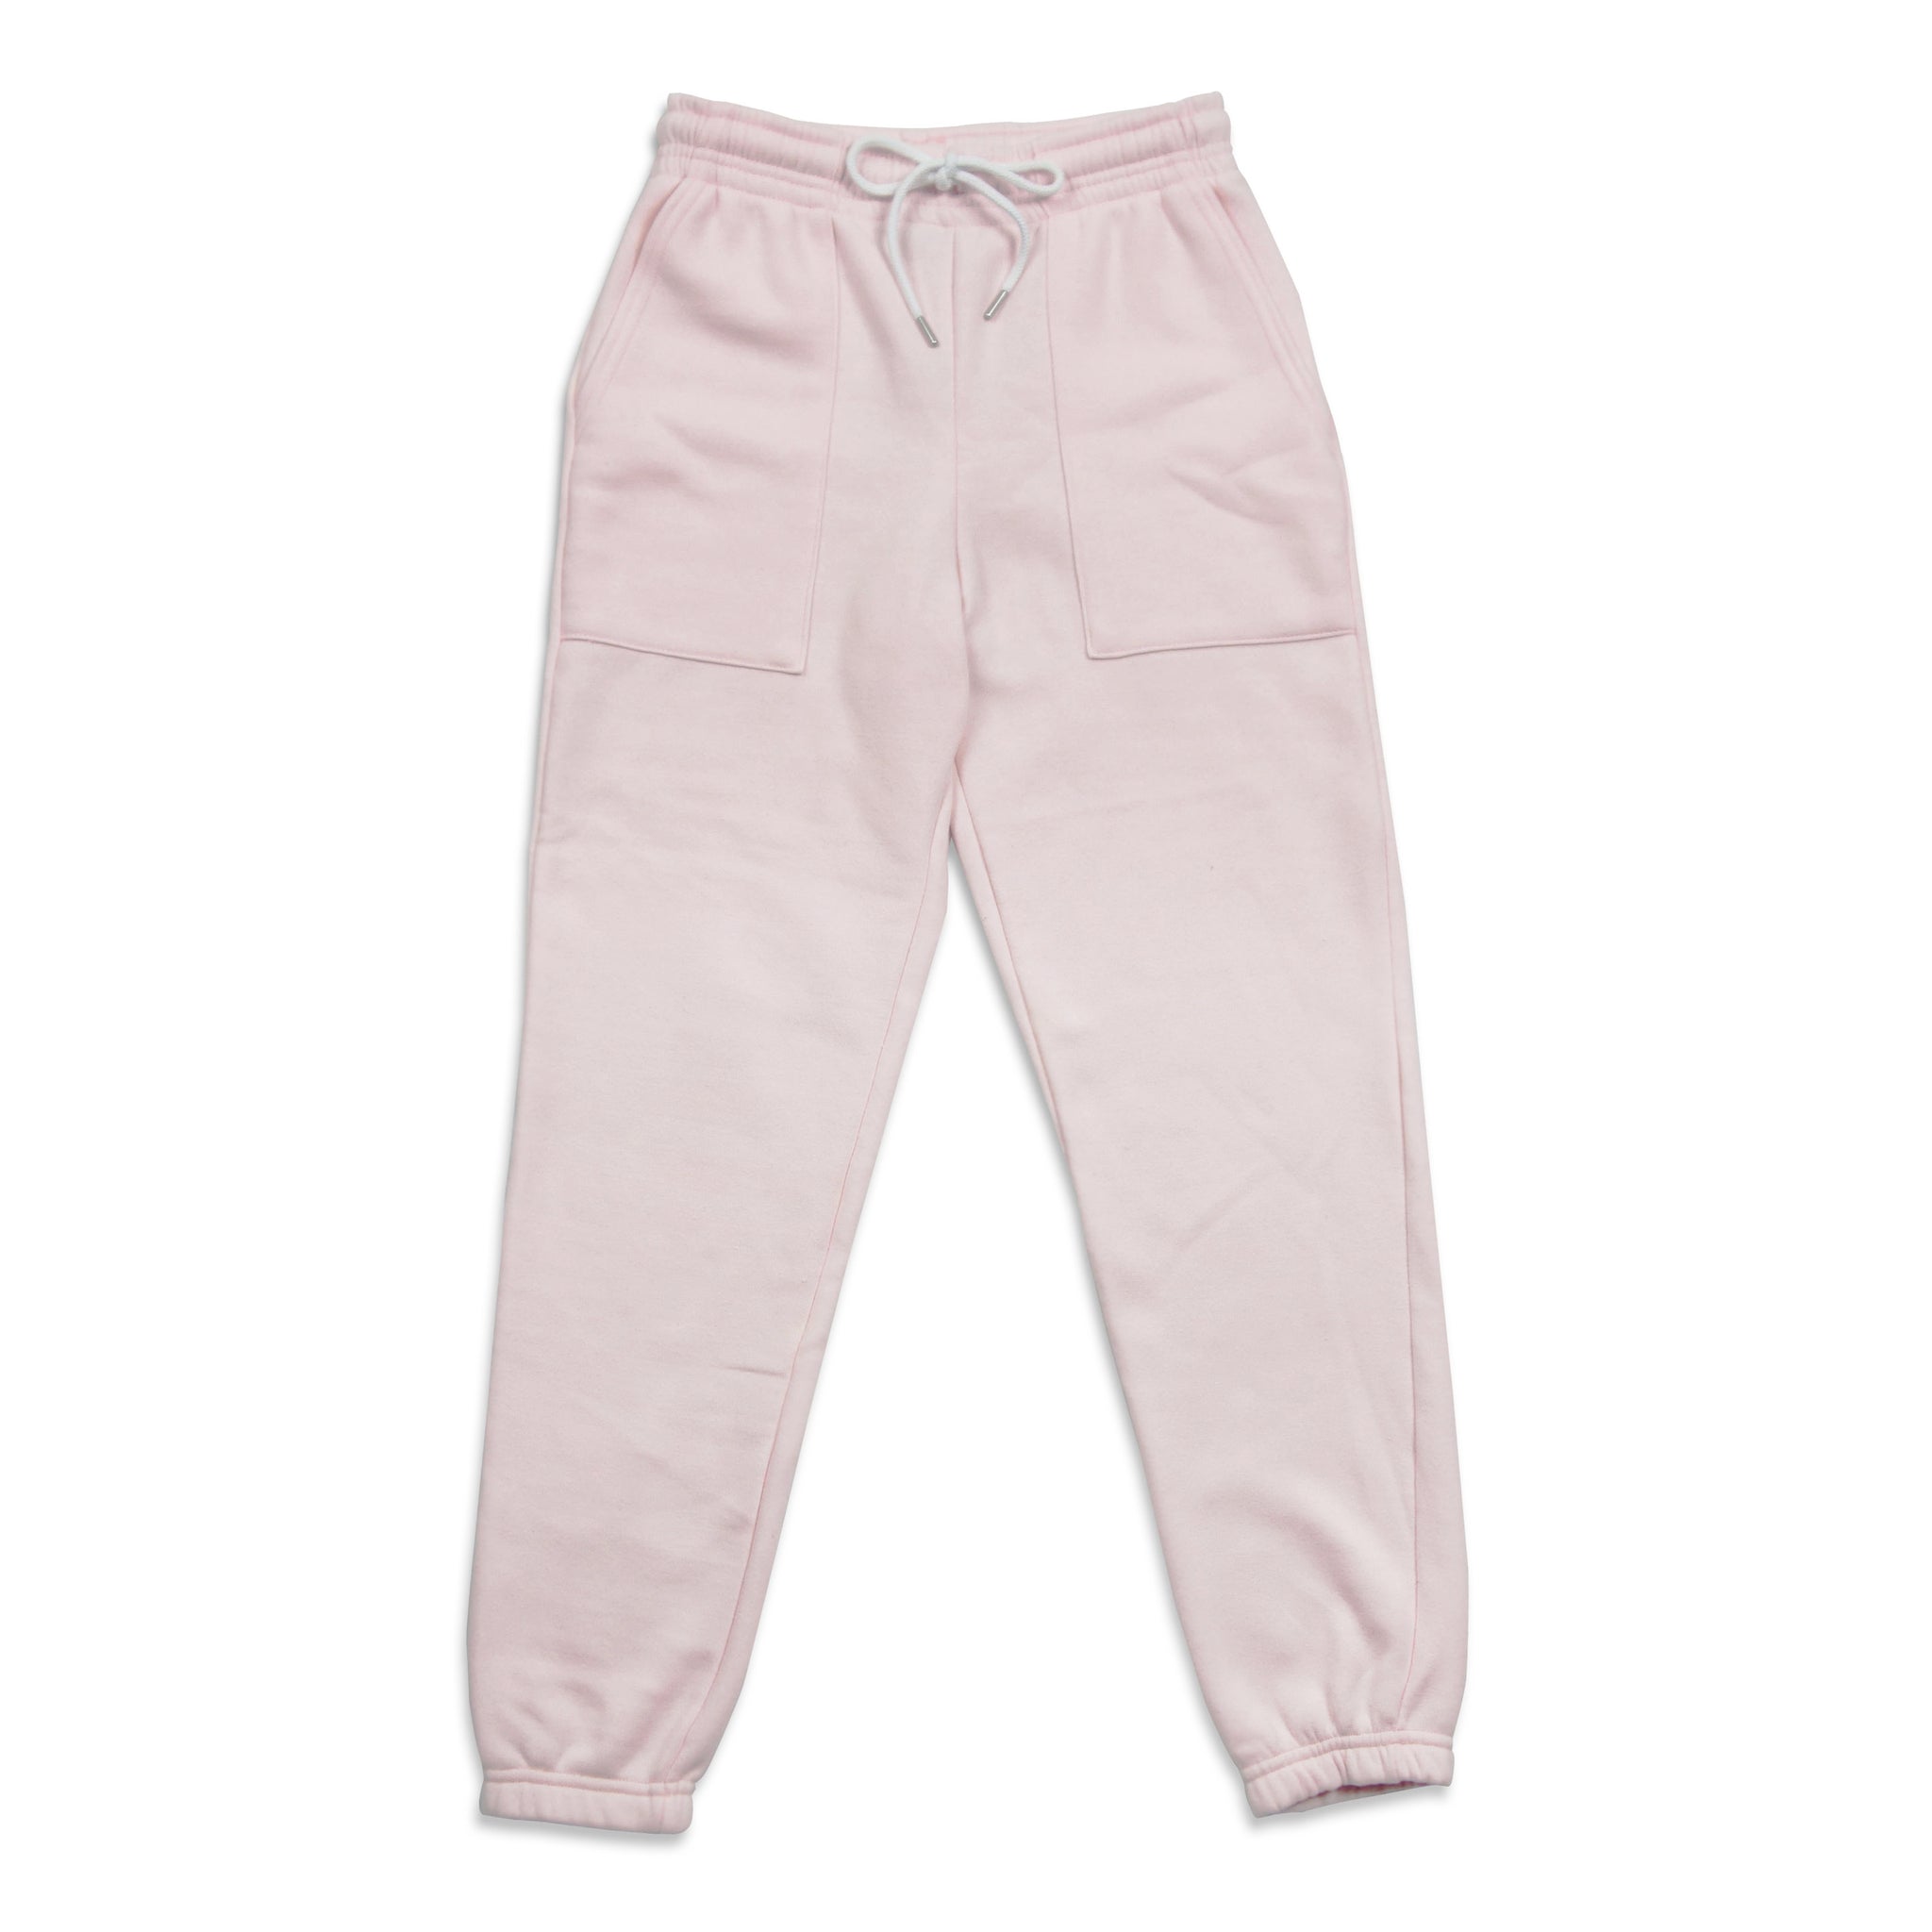 Tri-Blend Sweatpants with Pockets Basics Pink